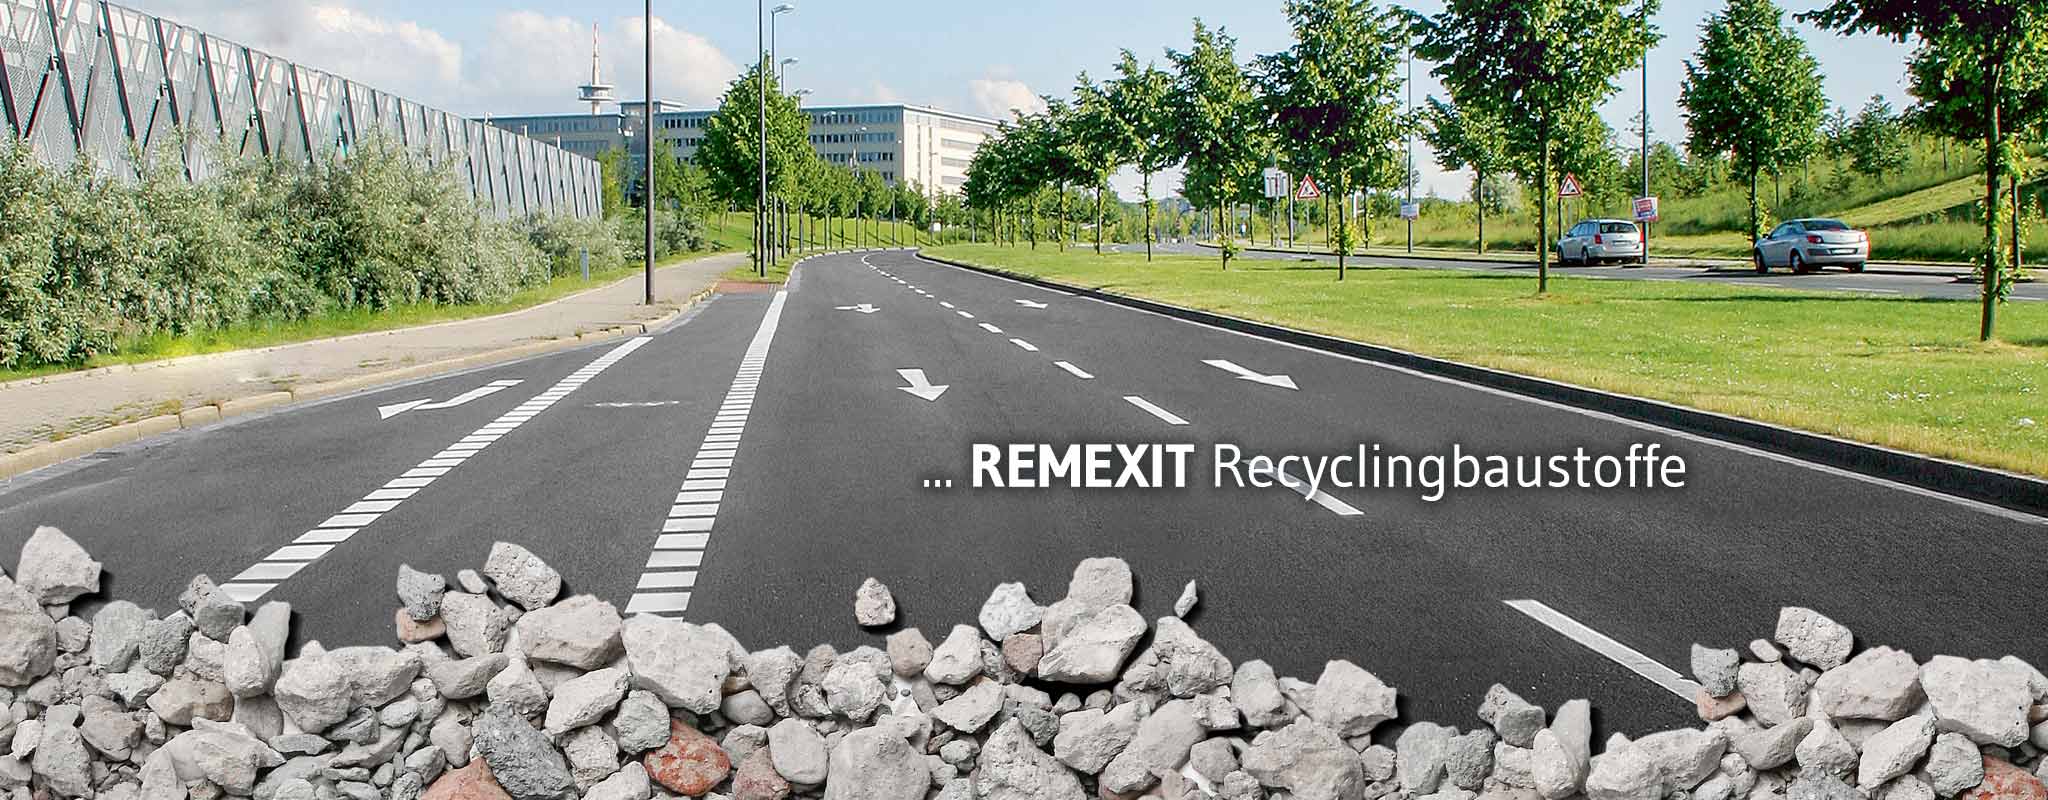 Hochwertiges Baustoffrecyclingergebnis: Recyclingbaustoffe der Marke ergibt remexit® rx_sol_home-slide_E_remexit_DE_01b.jpg